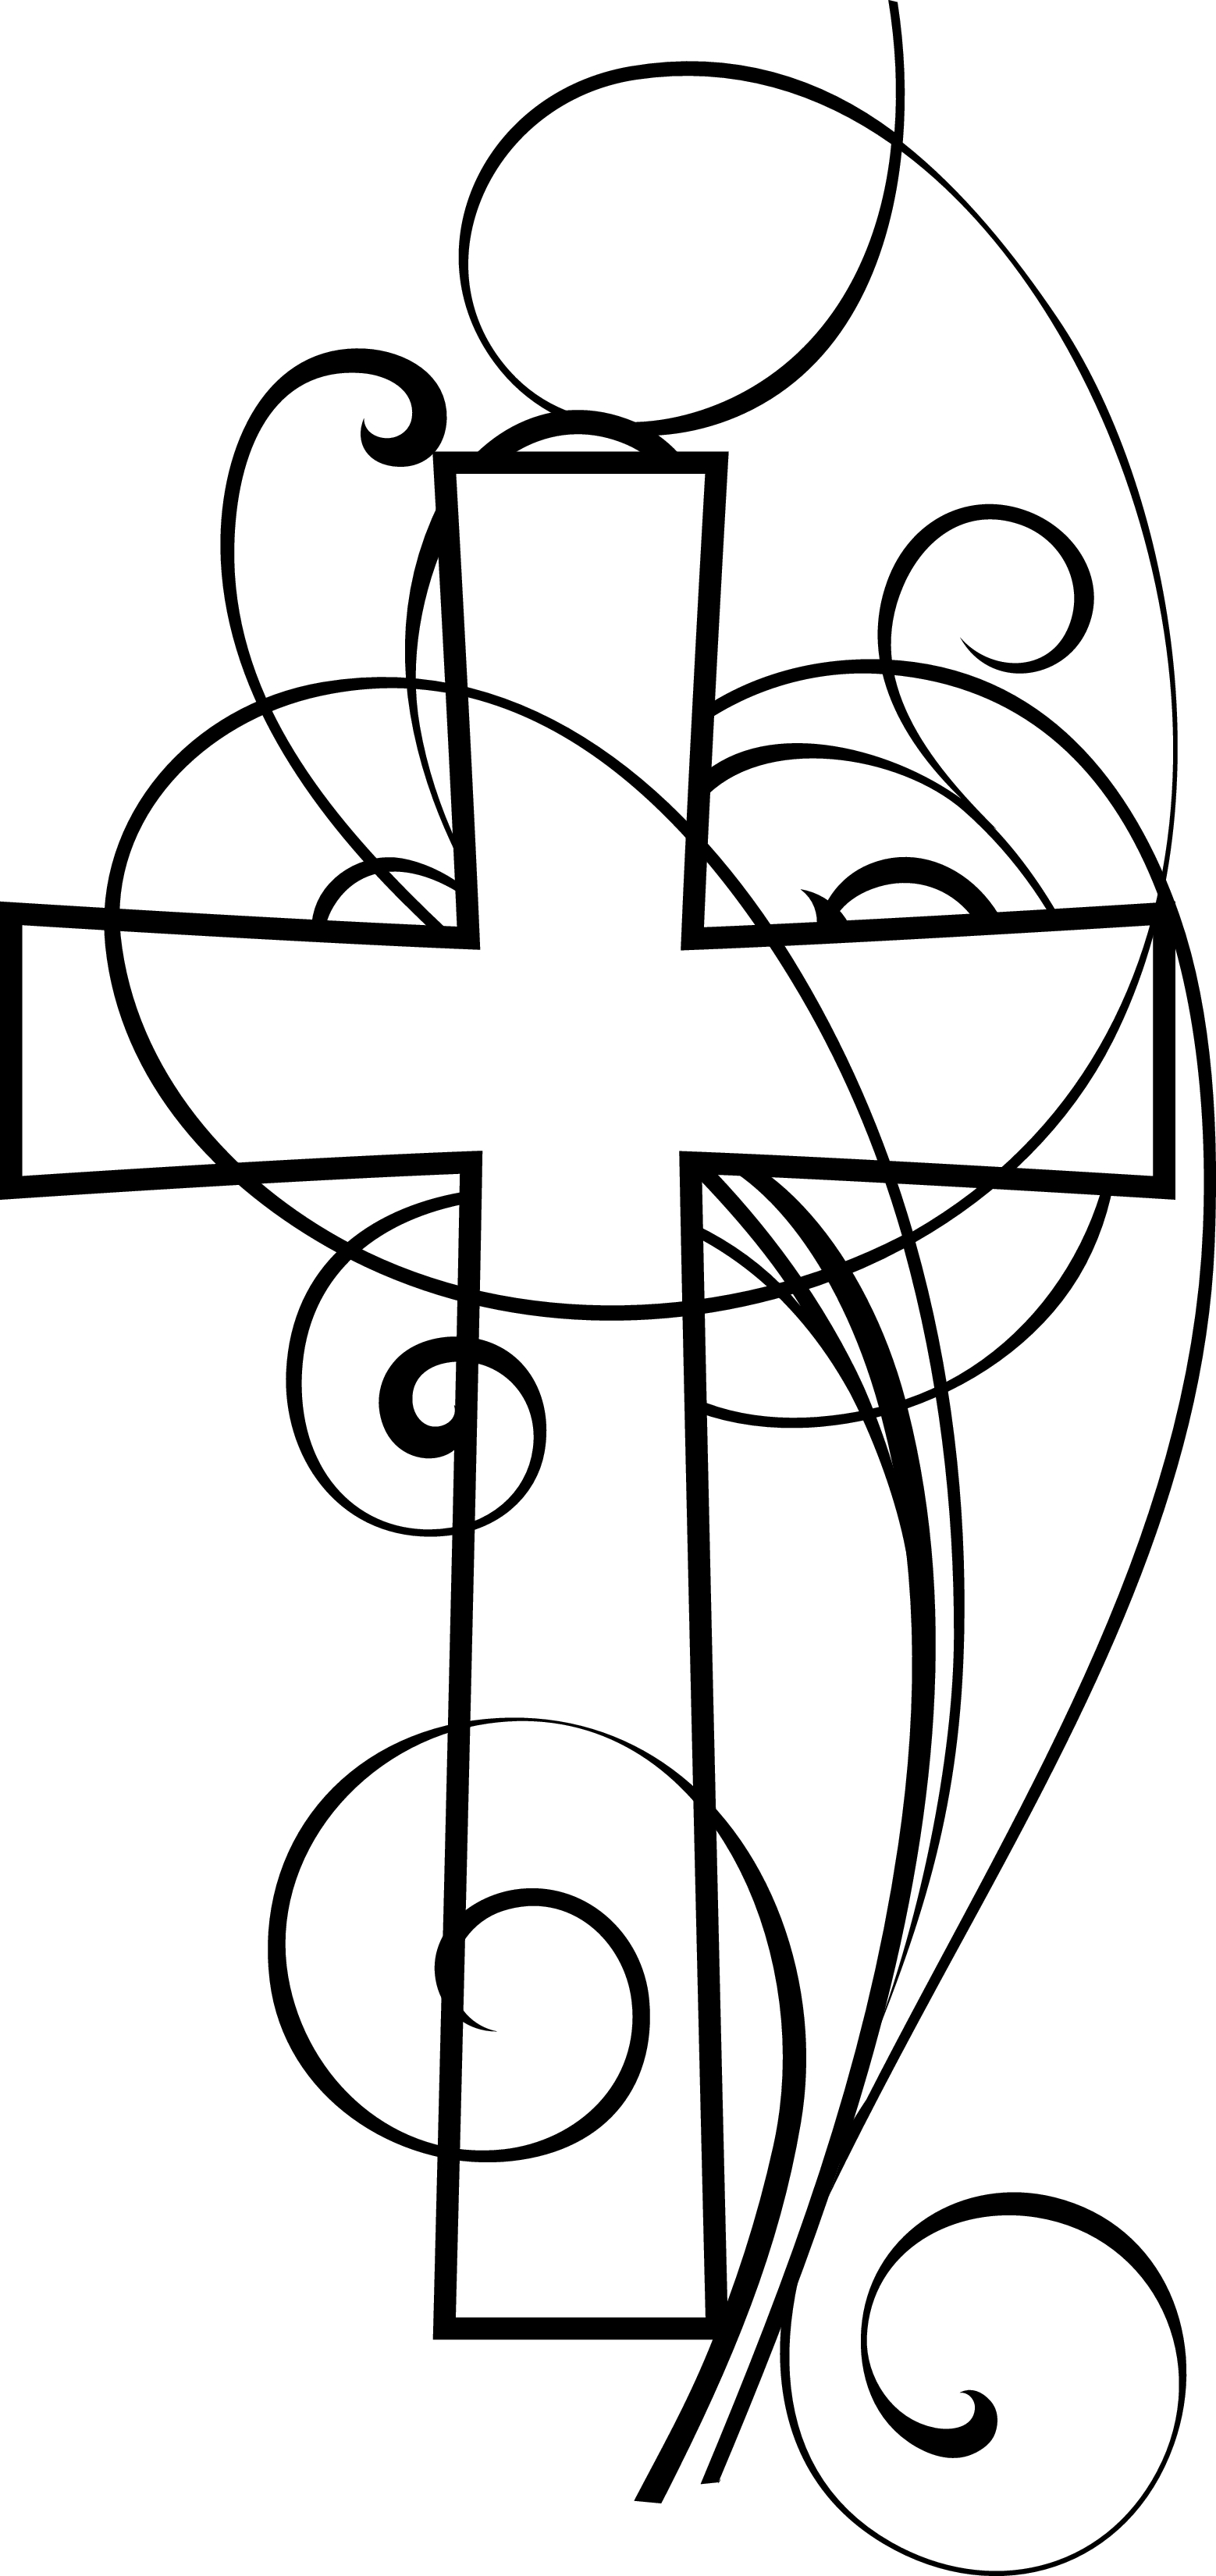 Catholic Cross Clip Art Clipart Panda Free Clipart Images